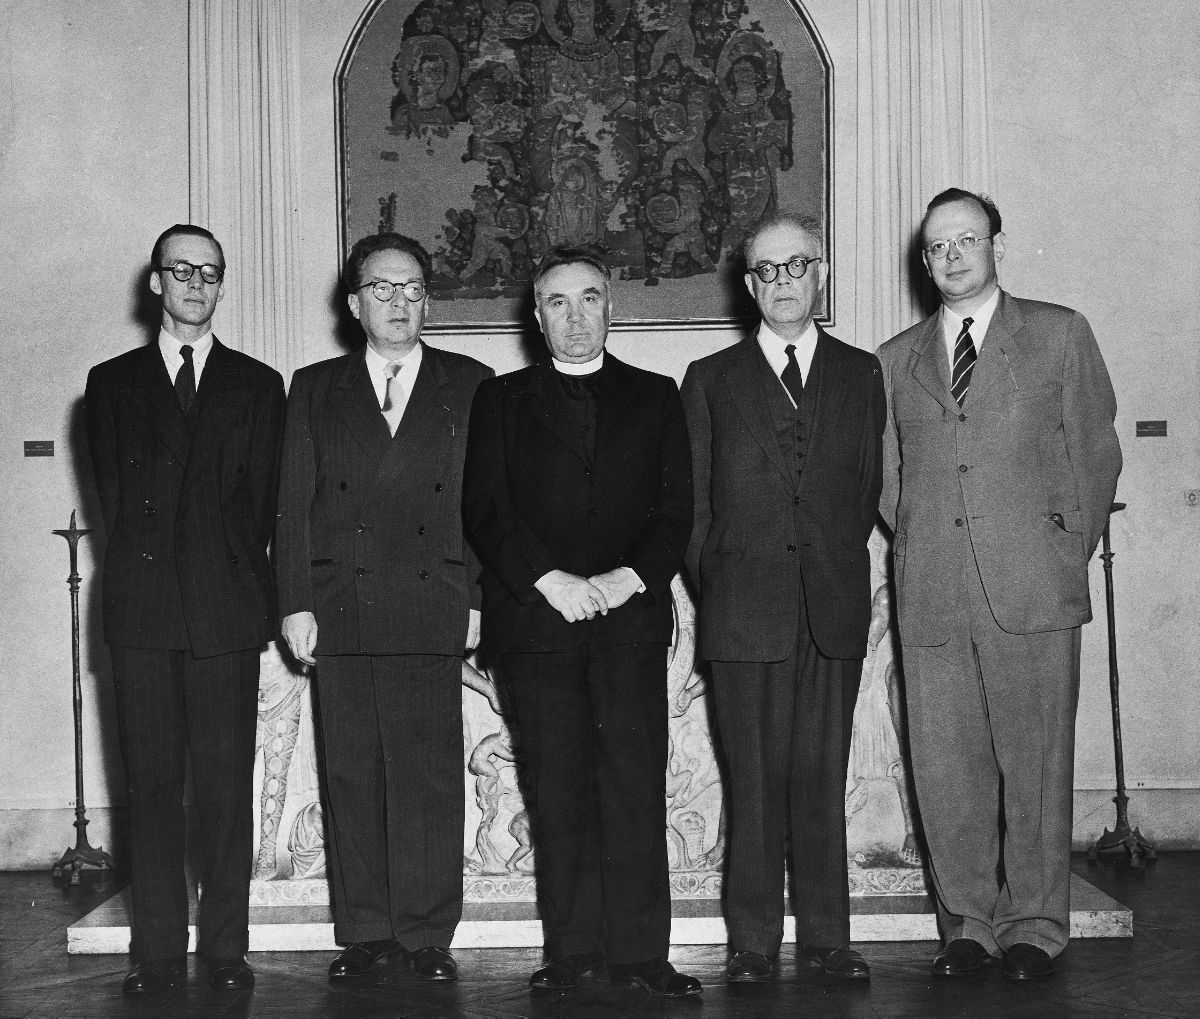 1952 Byzantine Studies Symposium Group Photo